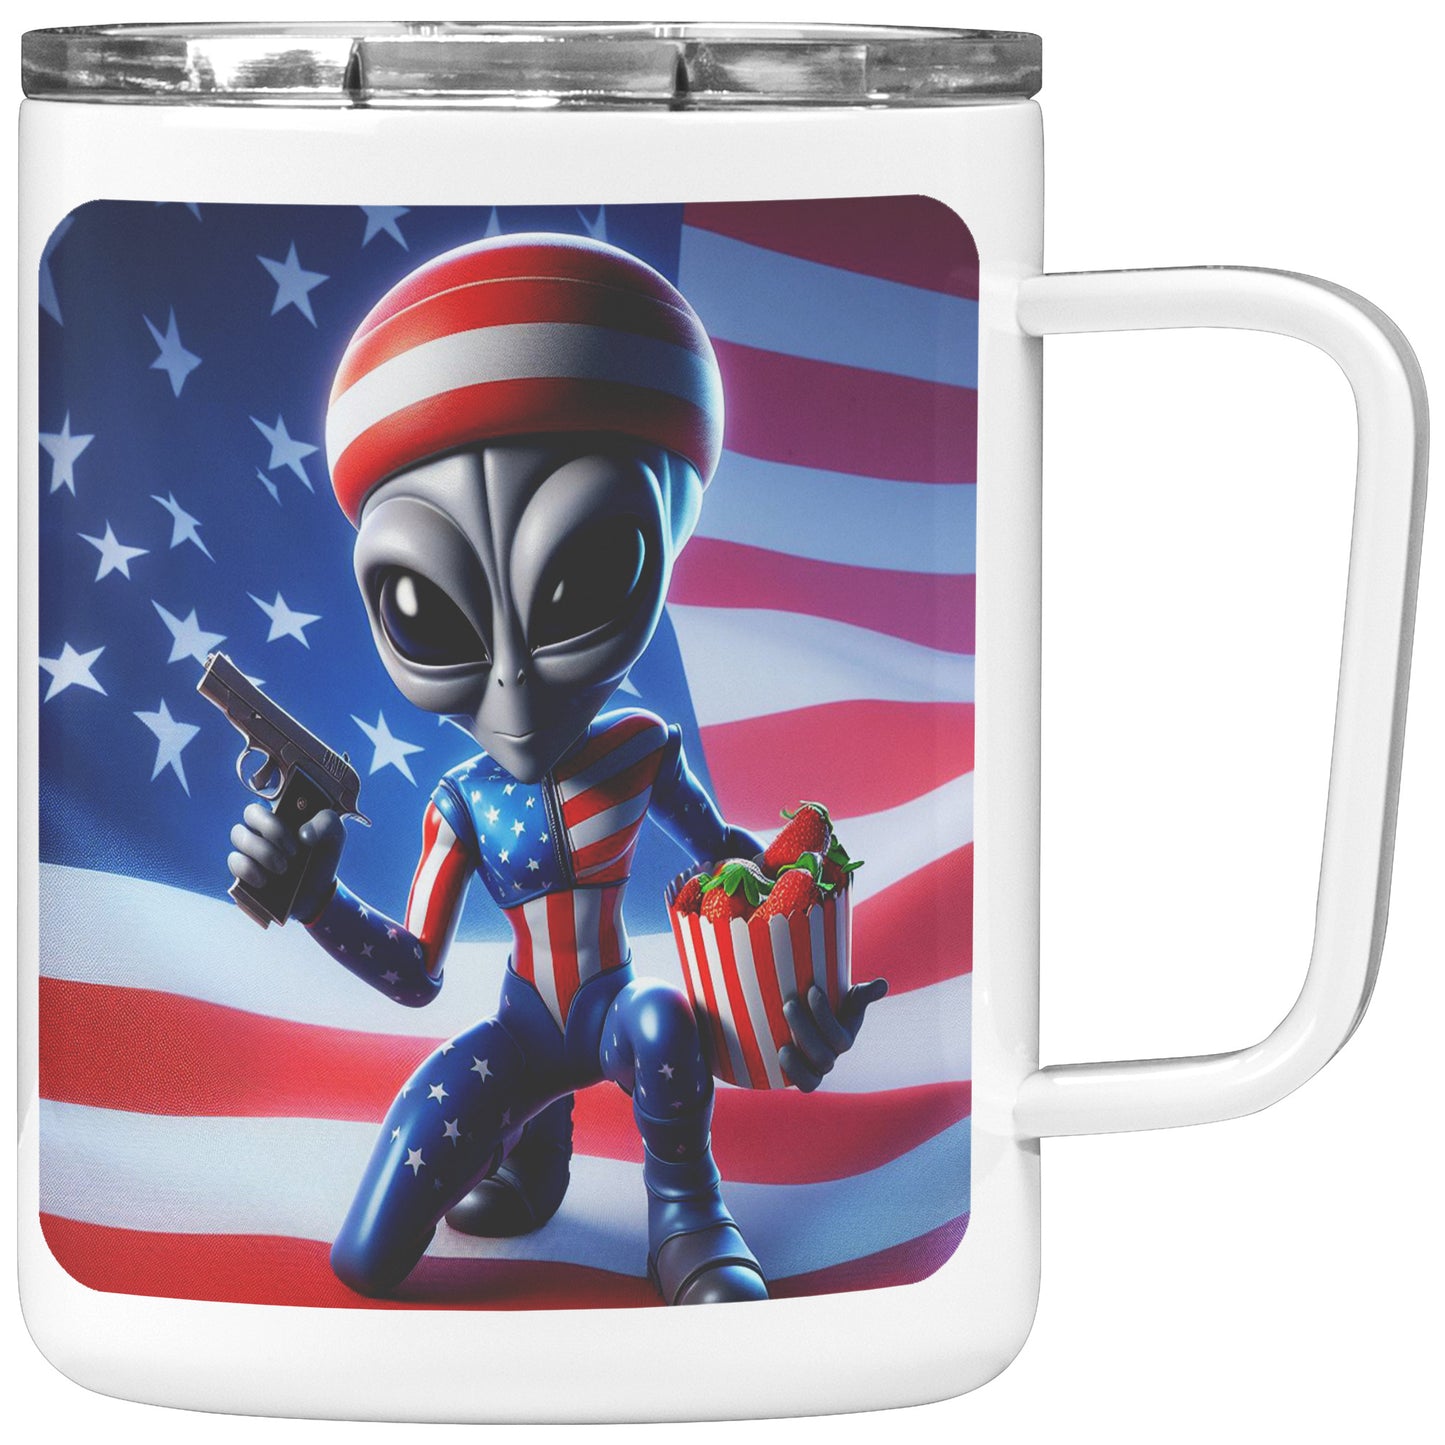 Nebulon the Grey Alien - Insulated Coffee Mug #20